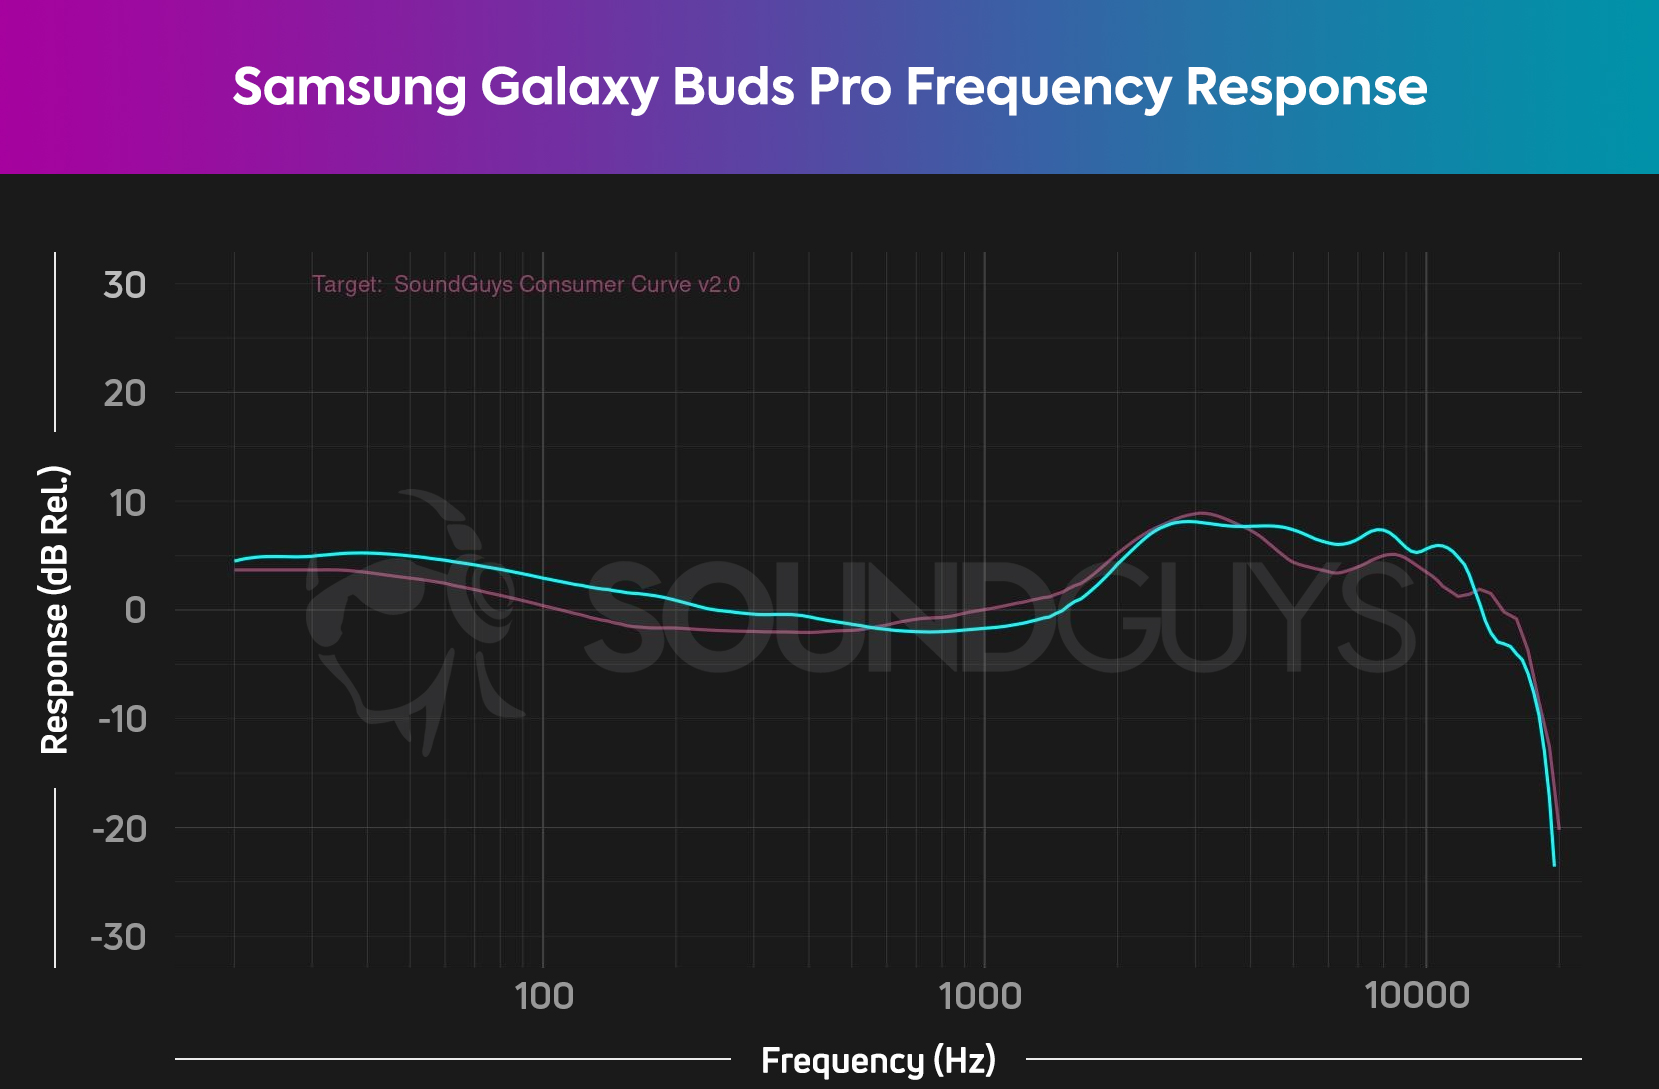 Samsung Galaxy Buds Pro frequency response chart SG consumer V2